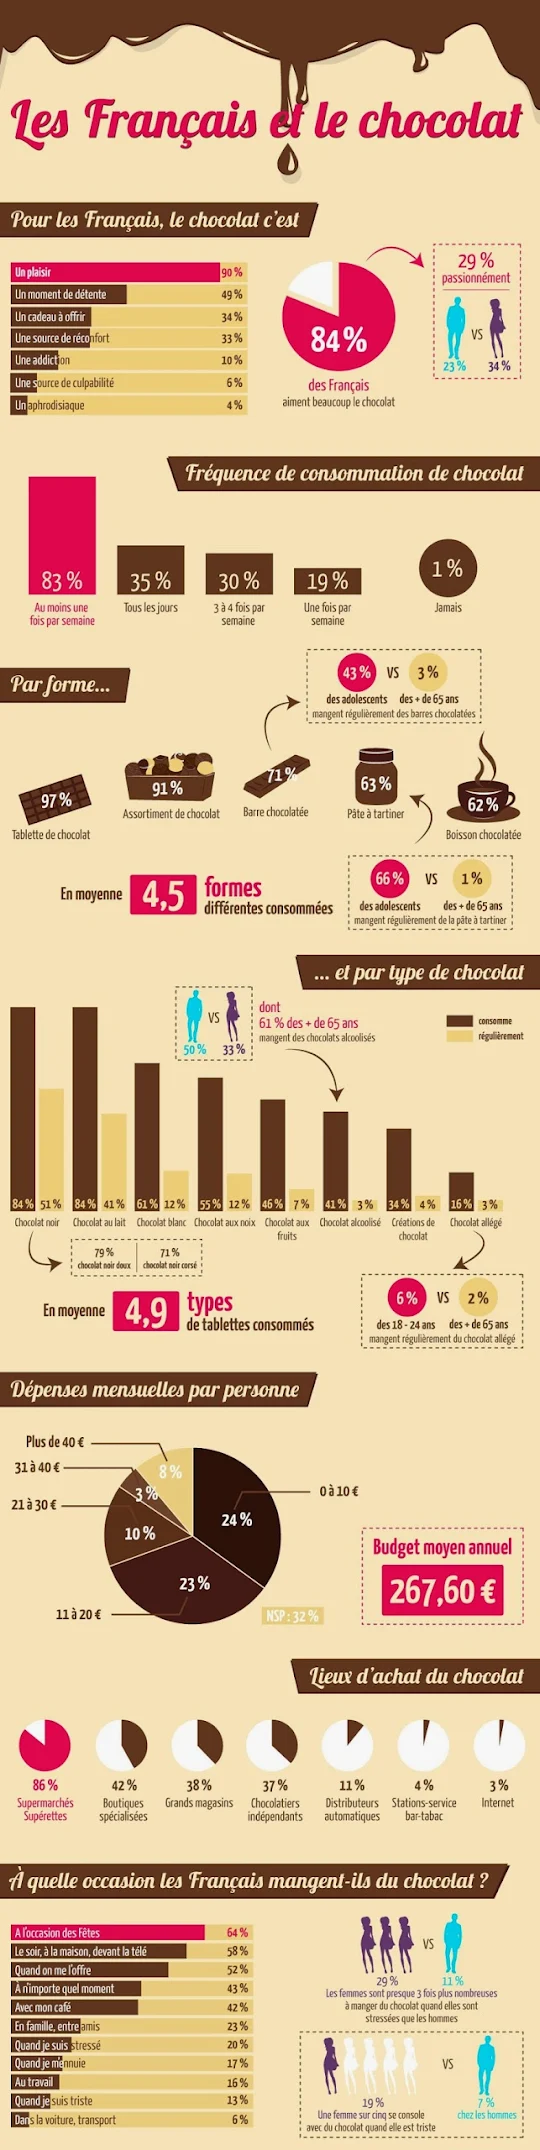 http://lesgourmands2-0.com/wp-content/uploads/2013/10/infographie-chocolat-2.jpg